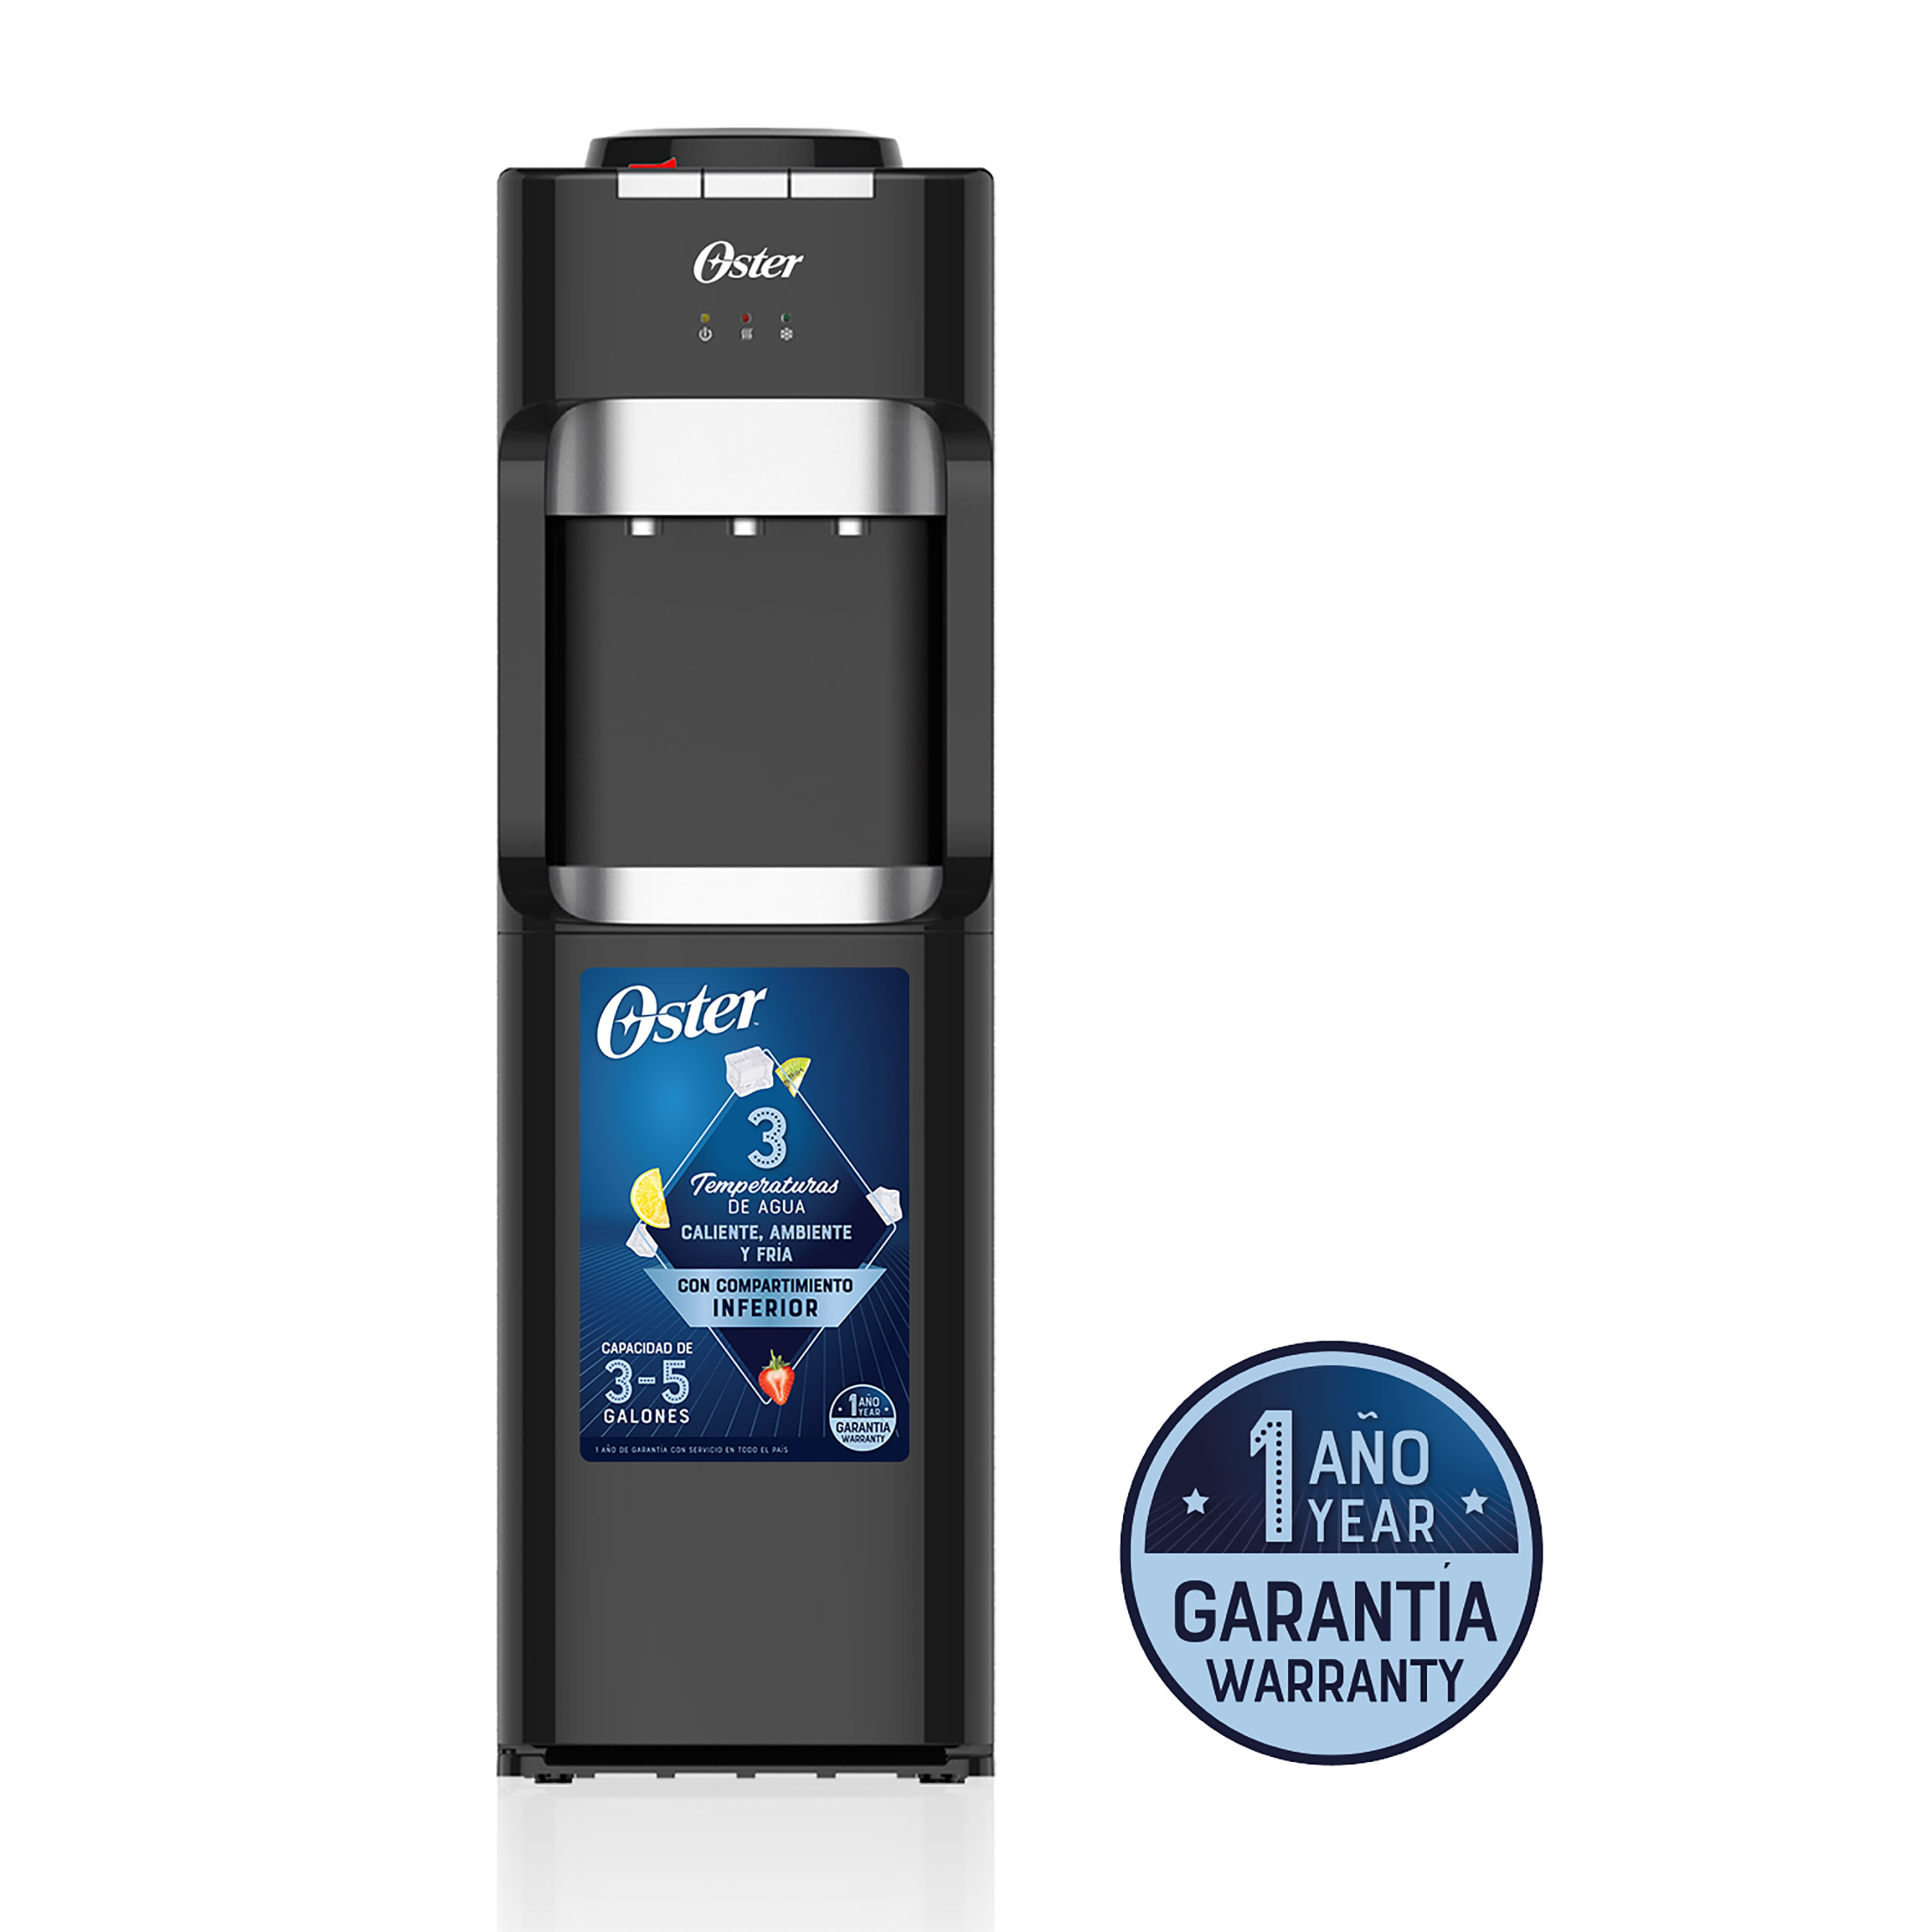 Comprar Kabel Dispensador De Agua Fria Caliente, Walmart Guatemala - Maxi  Despensa